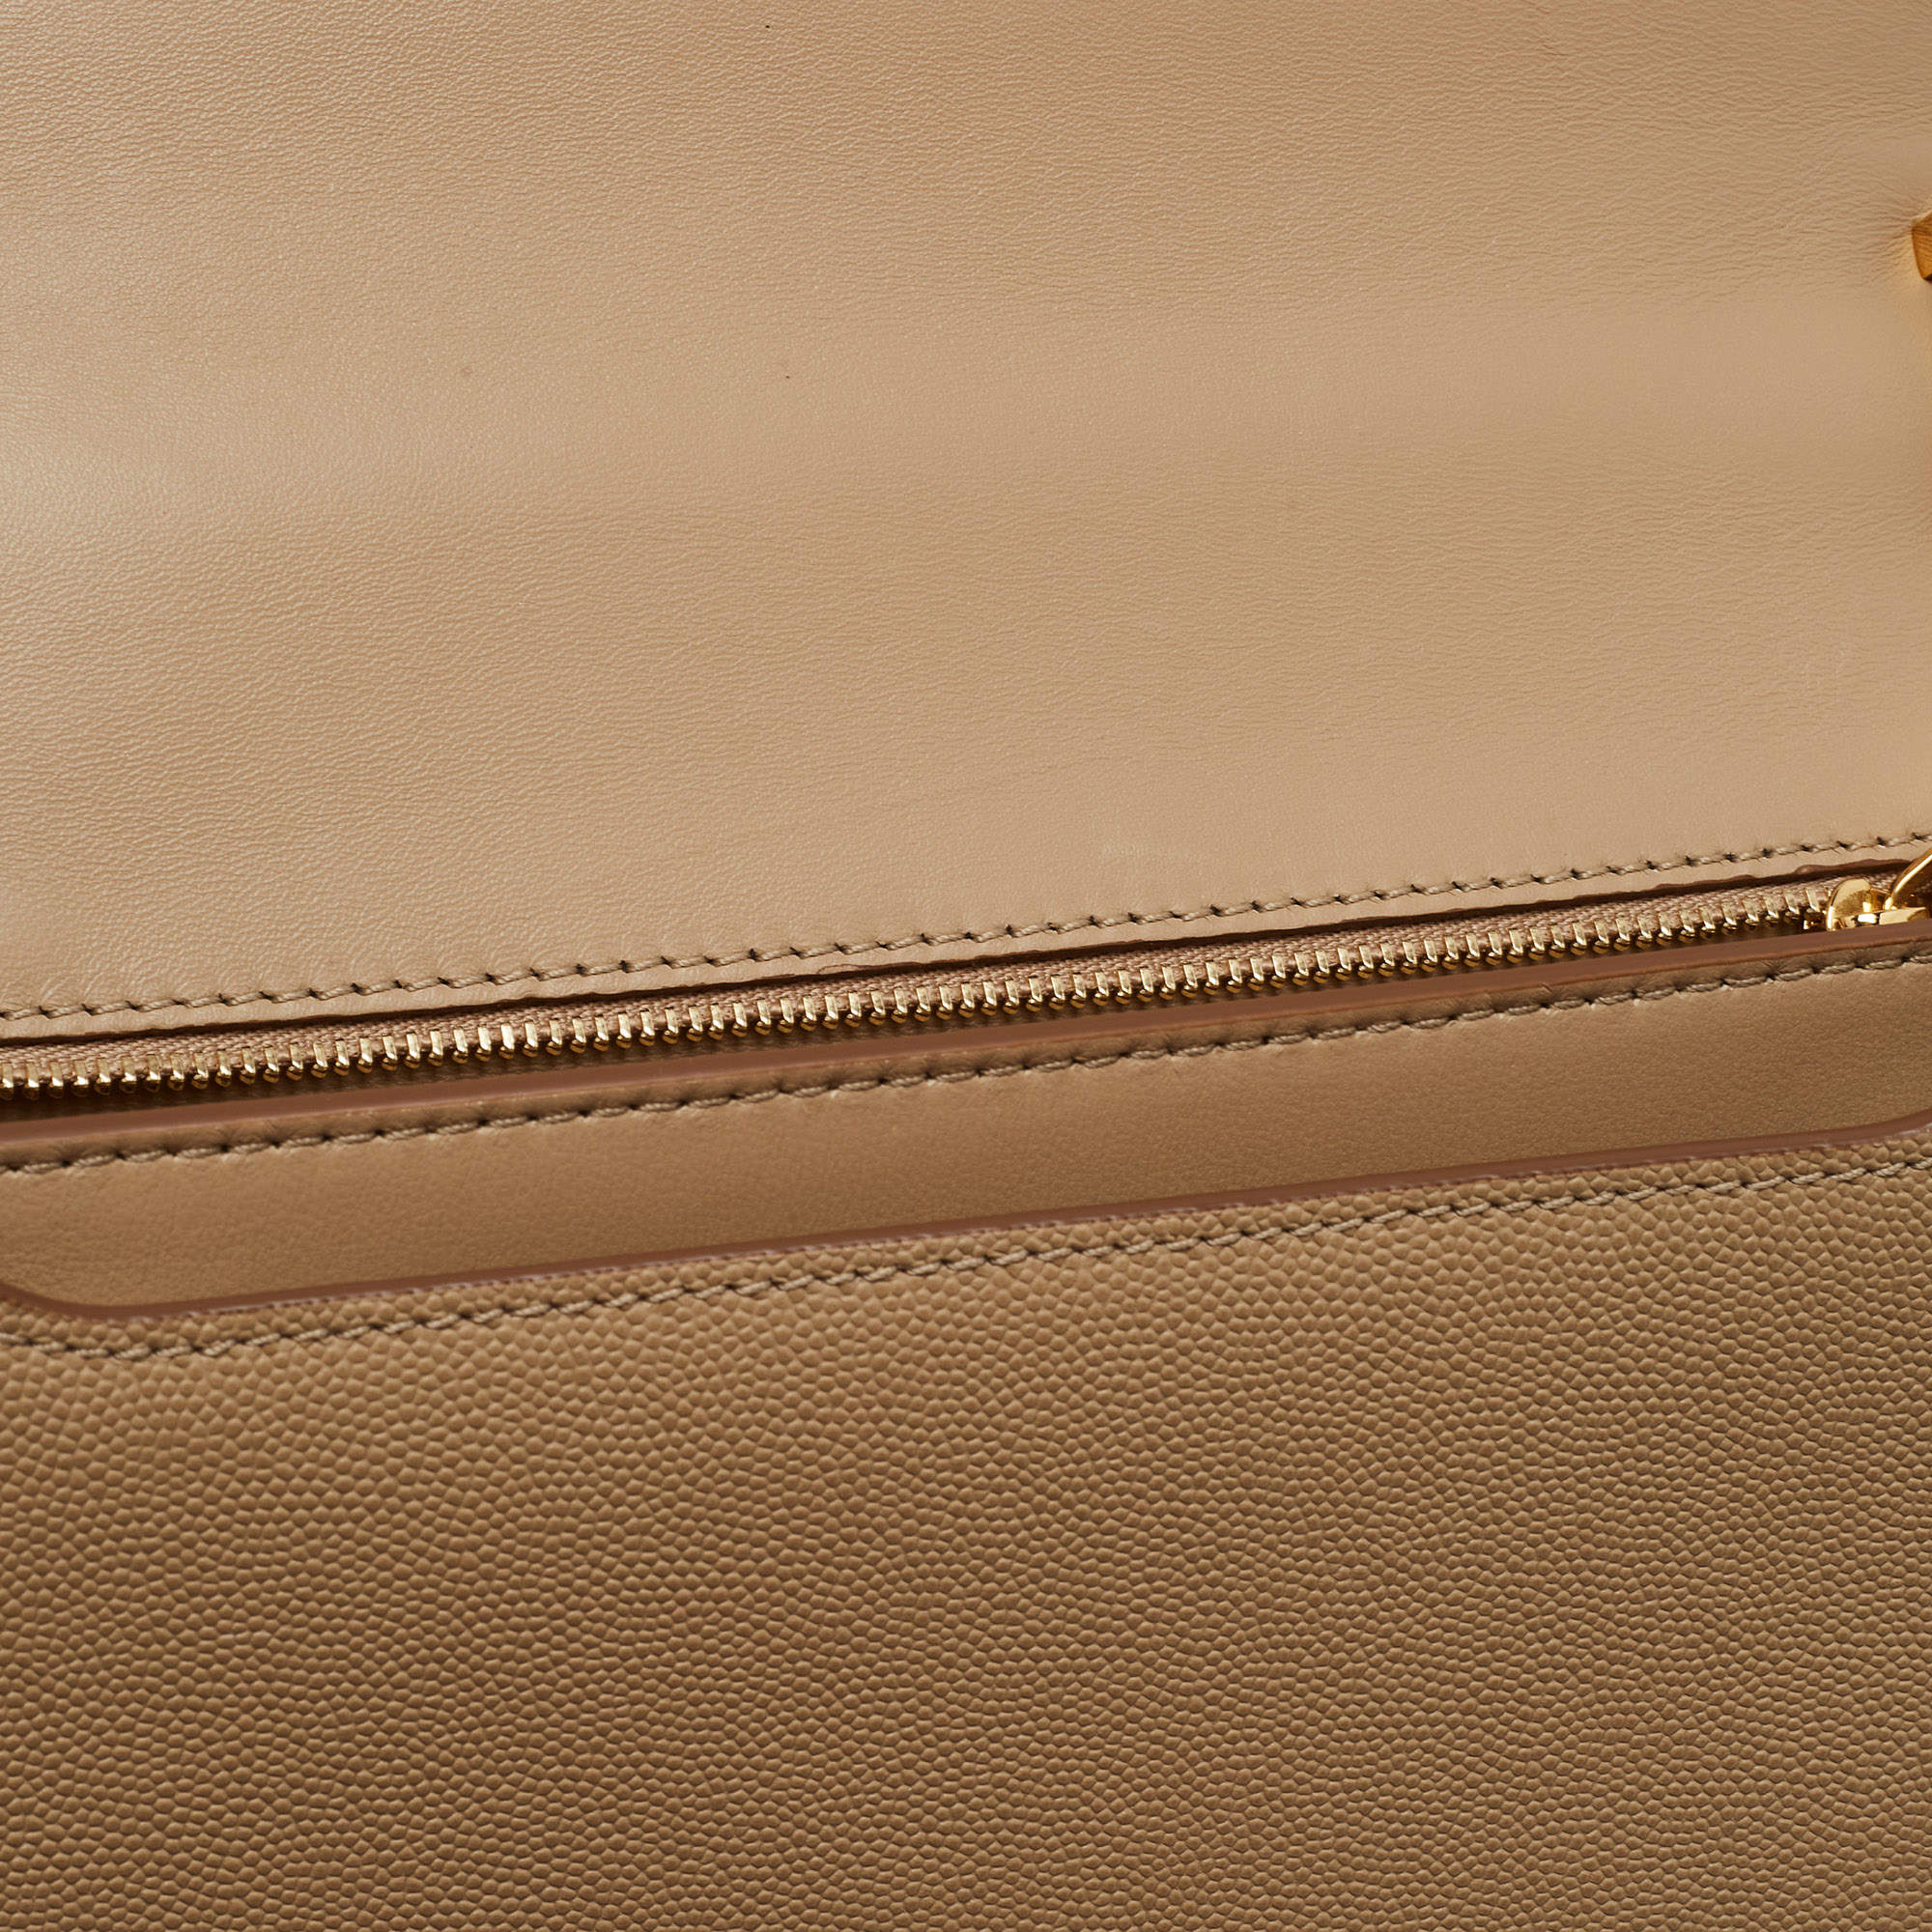 Tb bag leather handbag Burberry Beige in Leather - 32372937